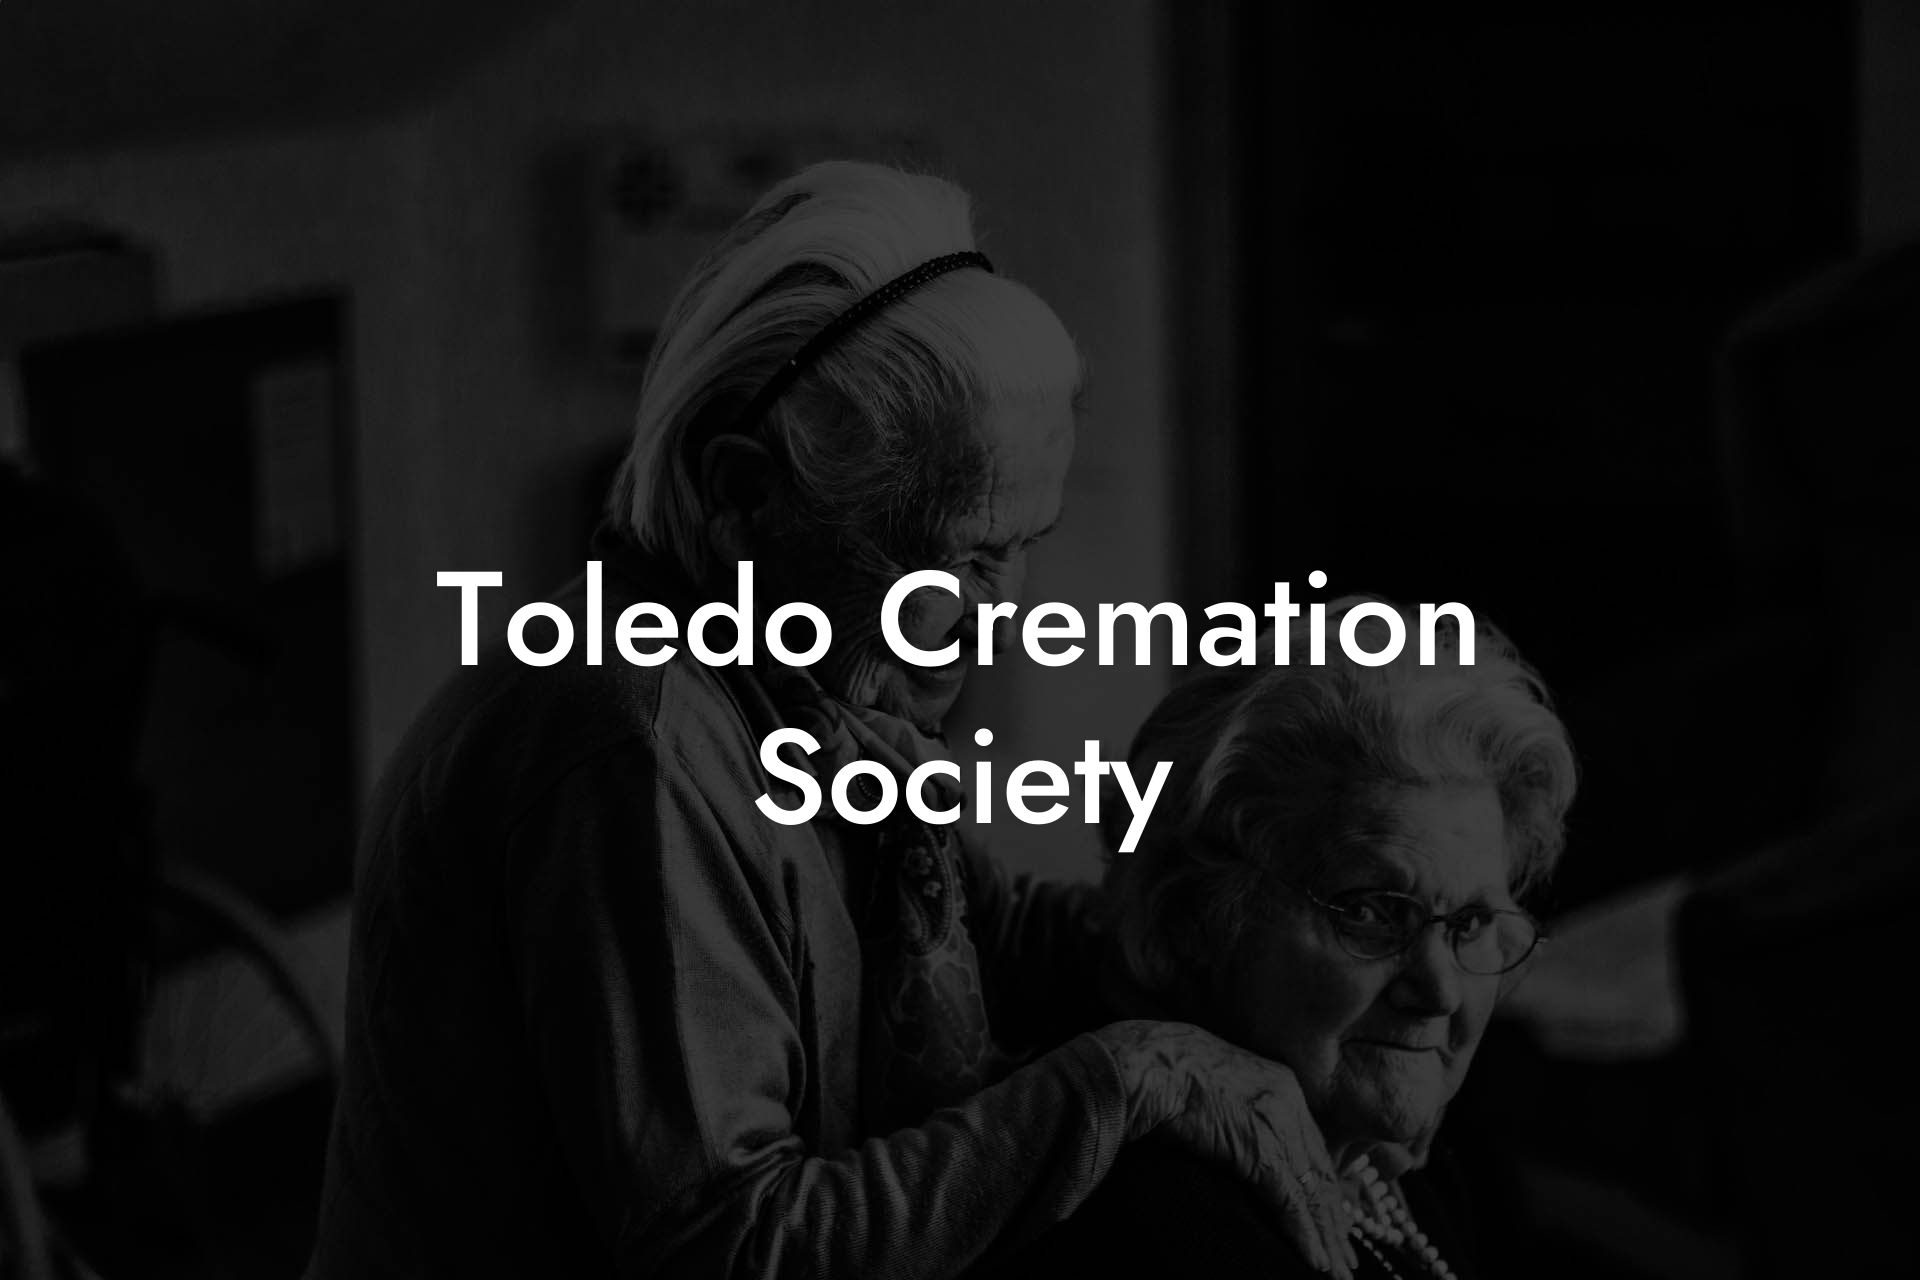 Toledo Cremation Society